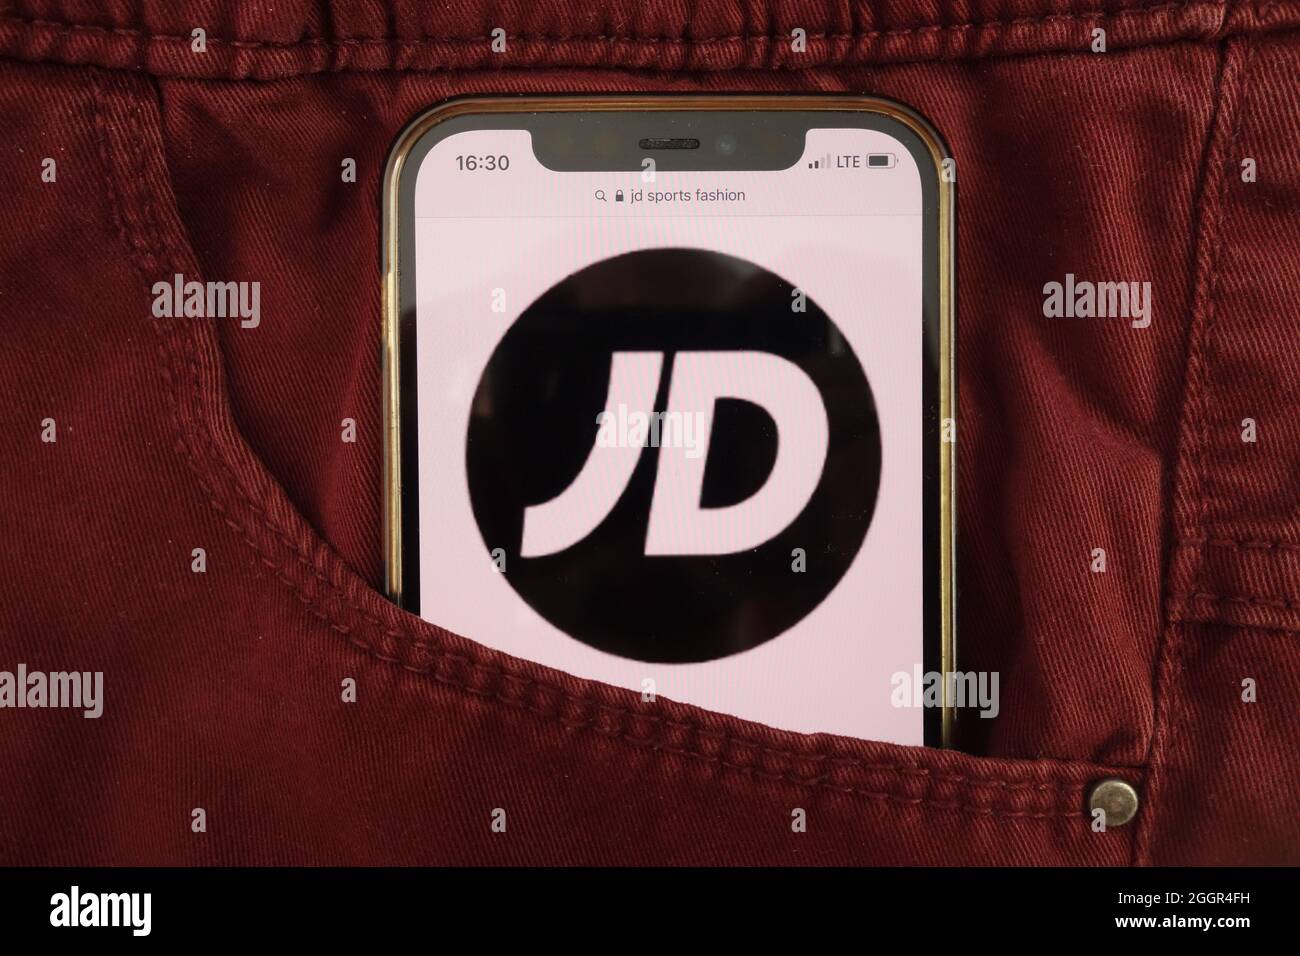 KONSKIE, POLAND - August 17, 2021: JD Sports Fashion plc logo displayed on mobile phone hidden in jeans pocket Stock Photo